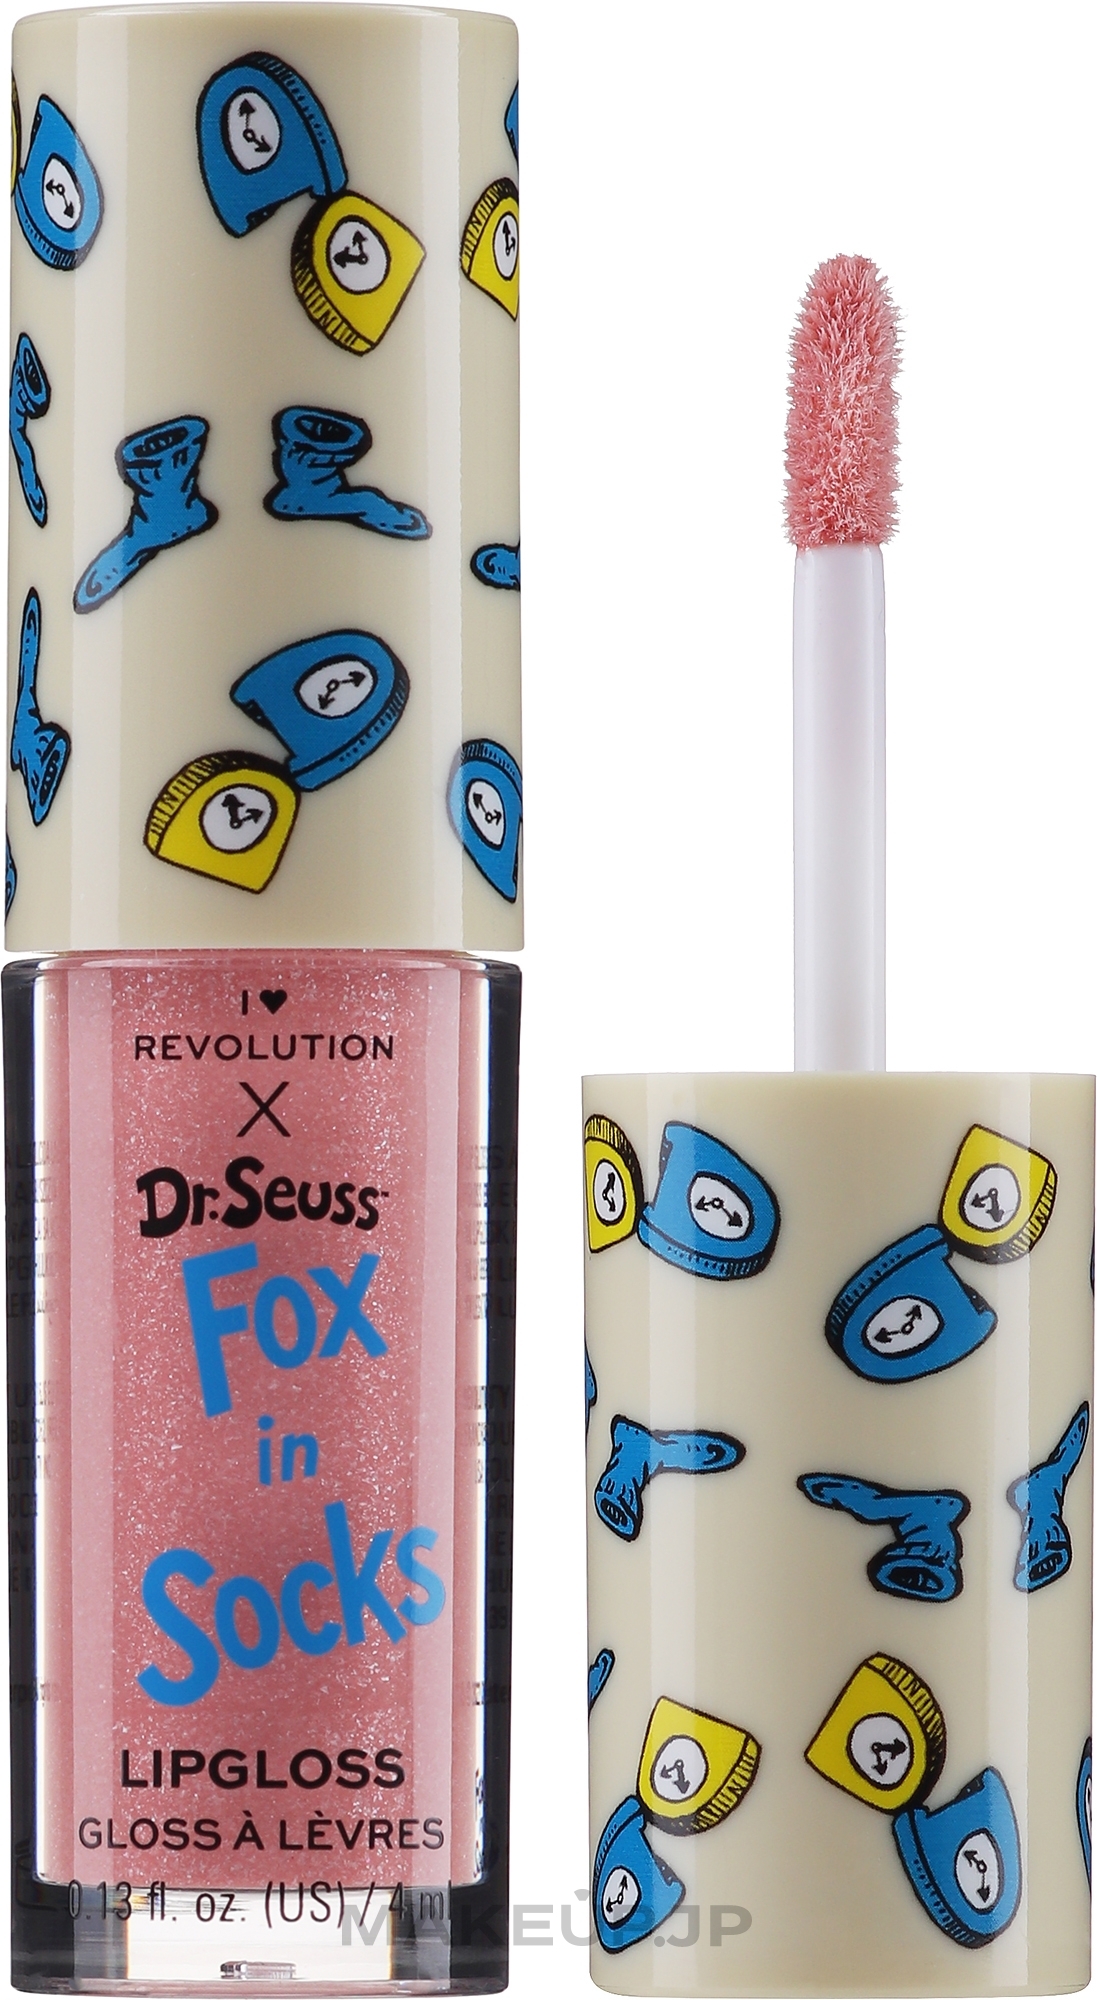 Lip Gloss - I Heart Revolution x Dr. Seuss Lip Gloss — photo Fox in Sox